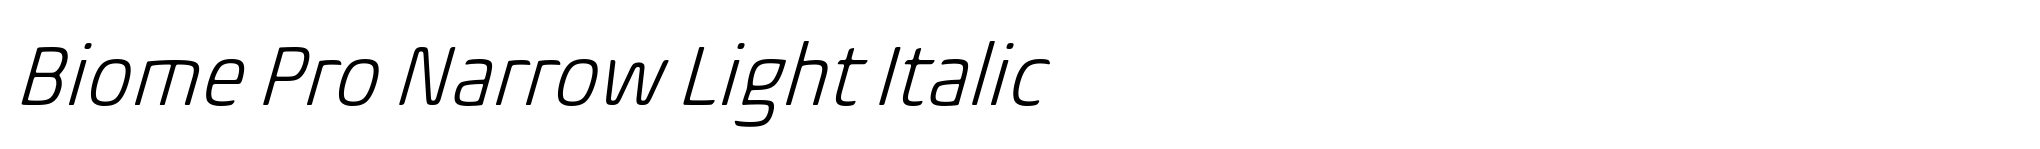 Biome Pro Narrow Light Italic image